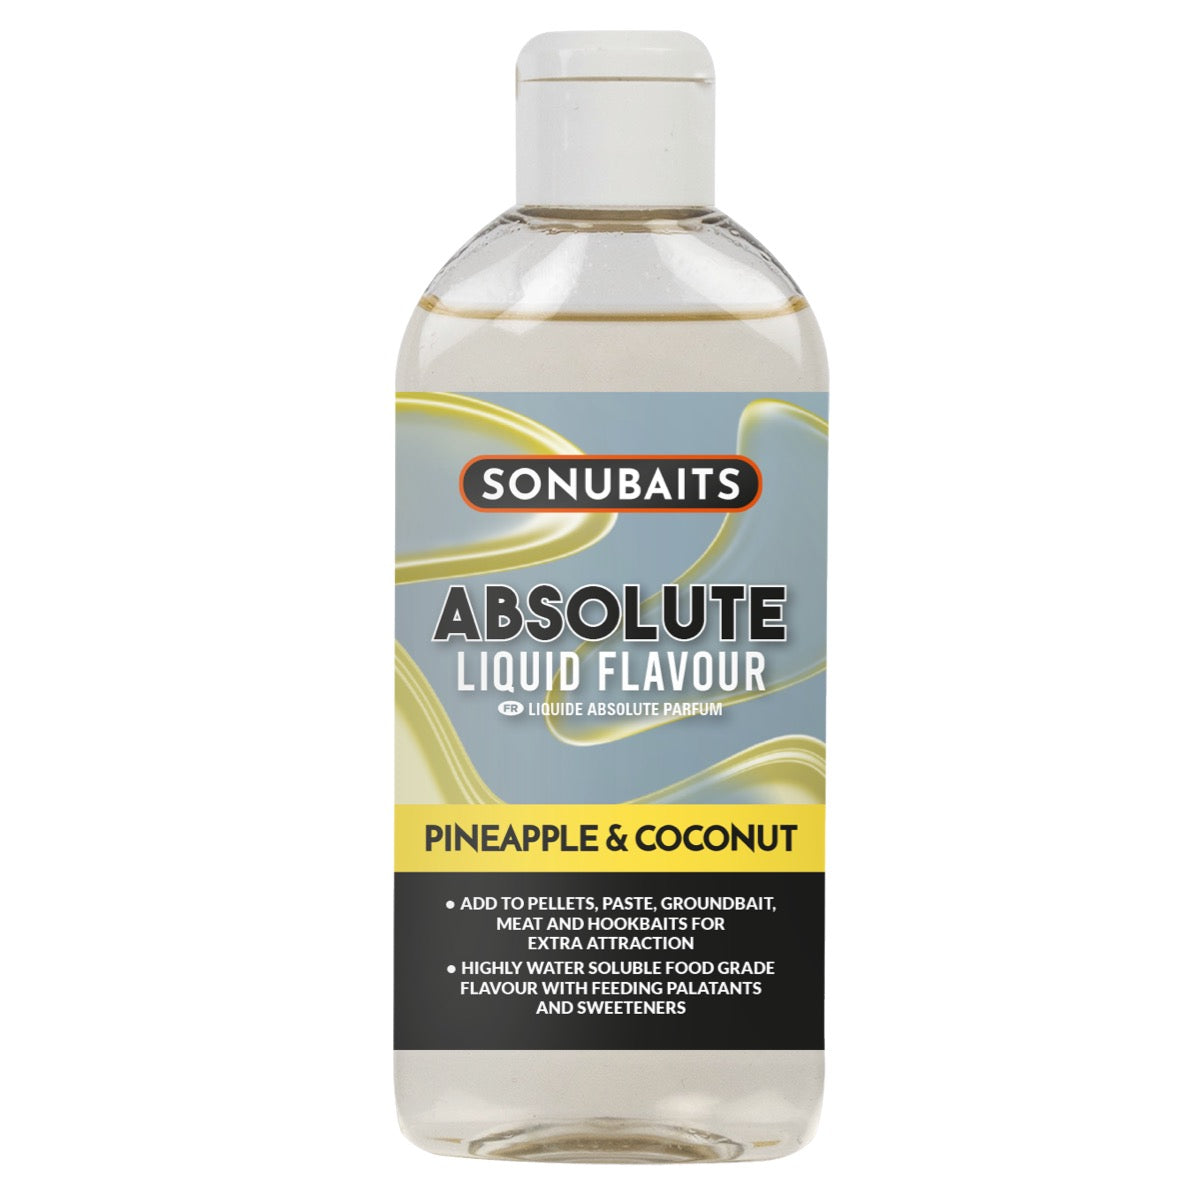 Sonubaits absolute liquid flavour Pineapple & Coconut